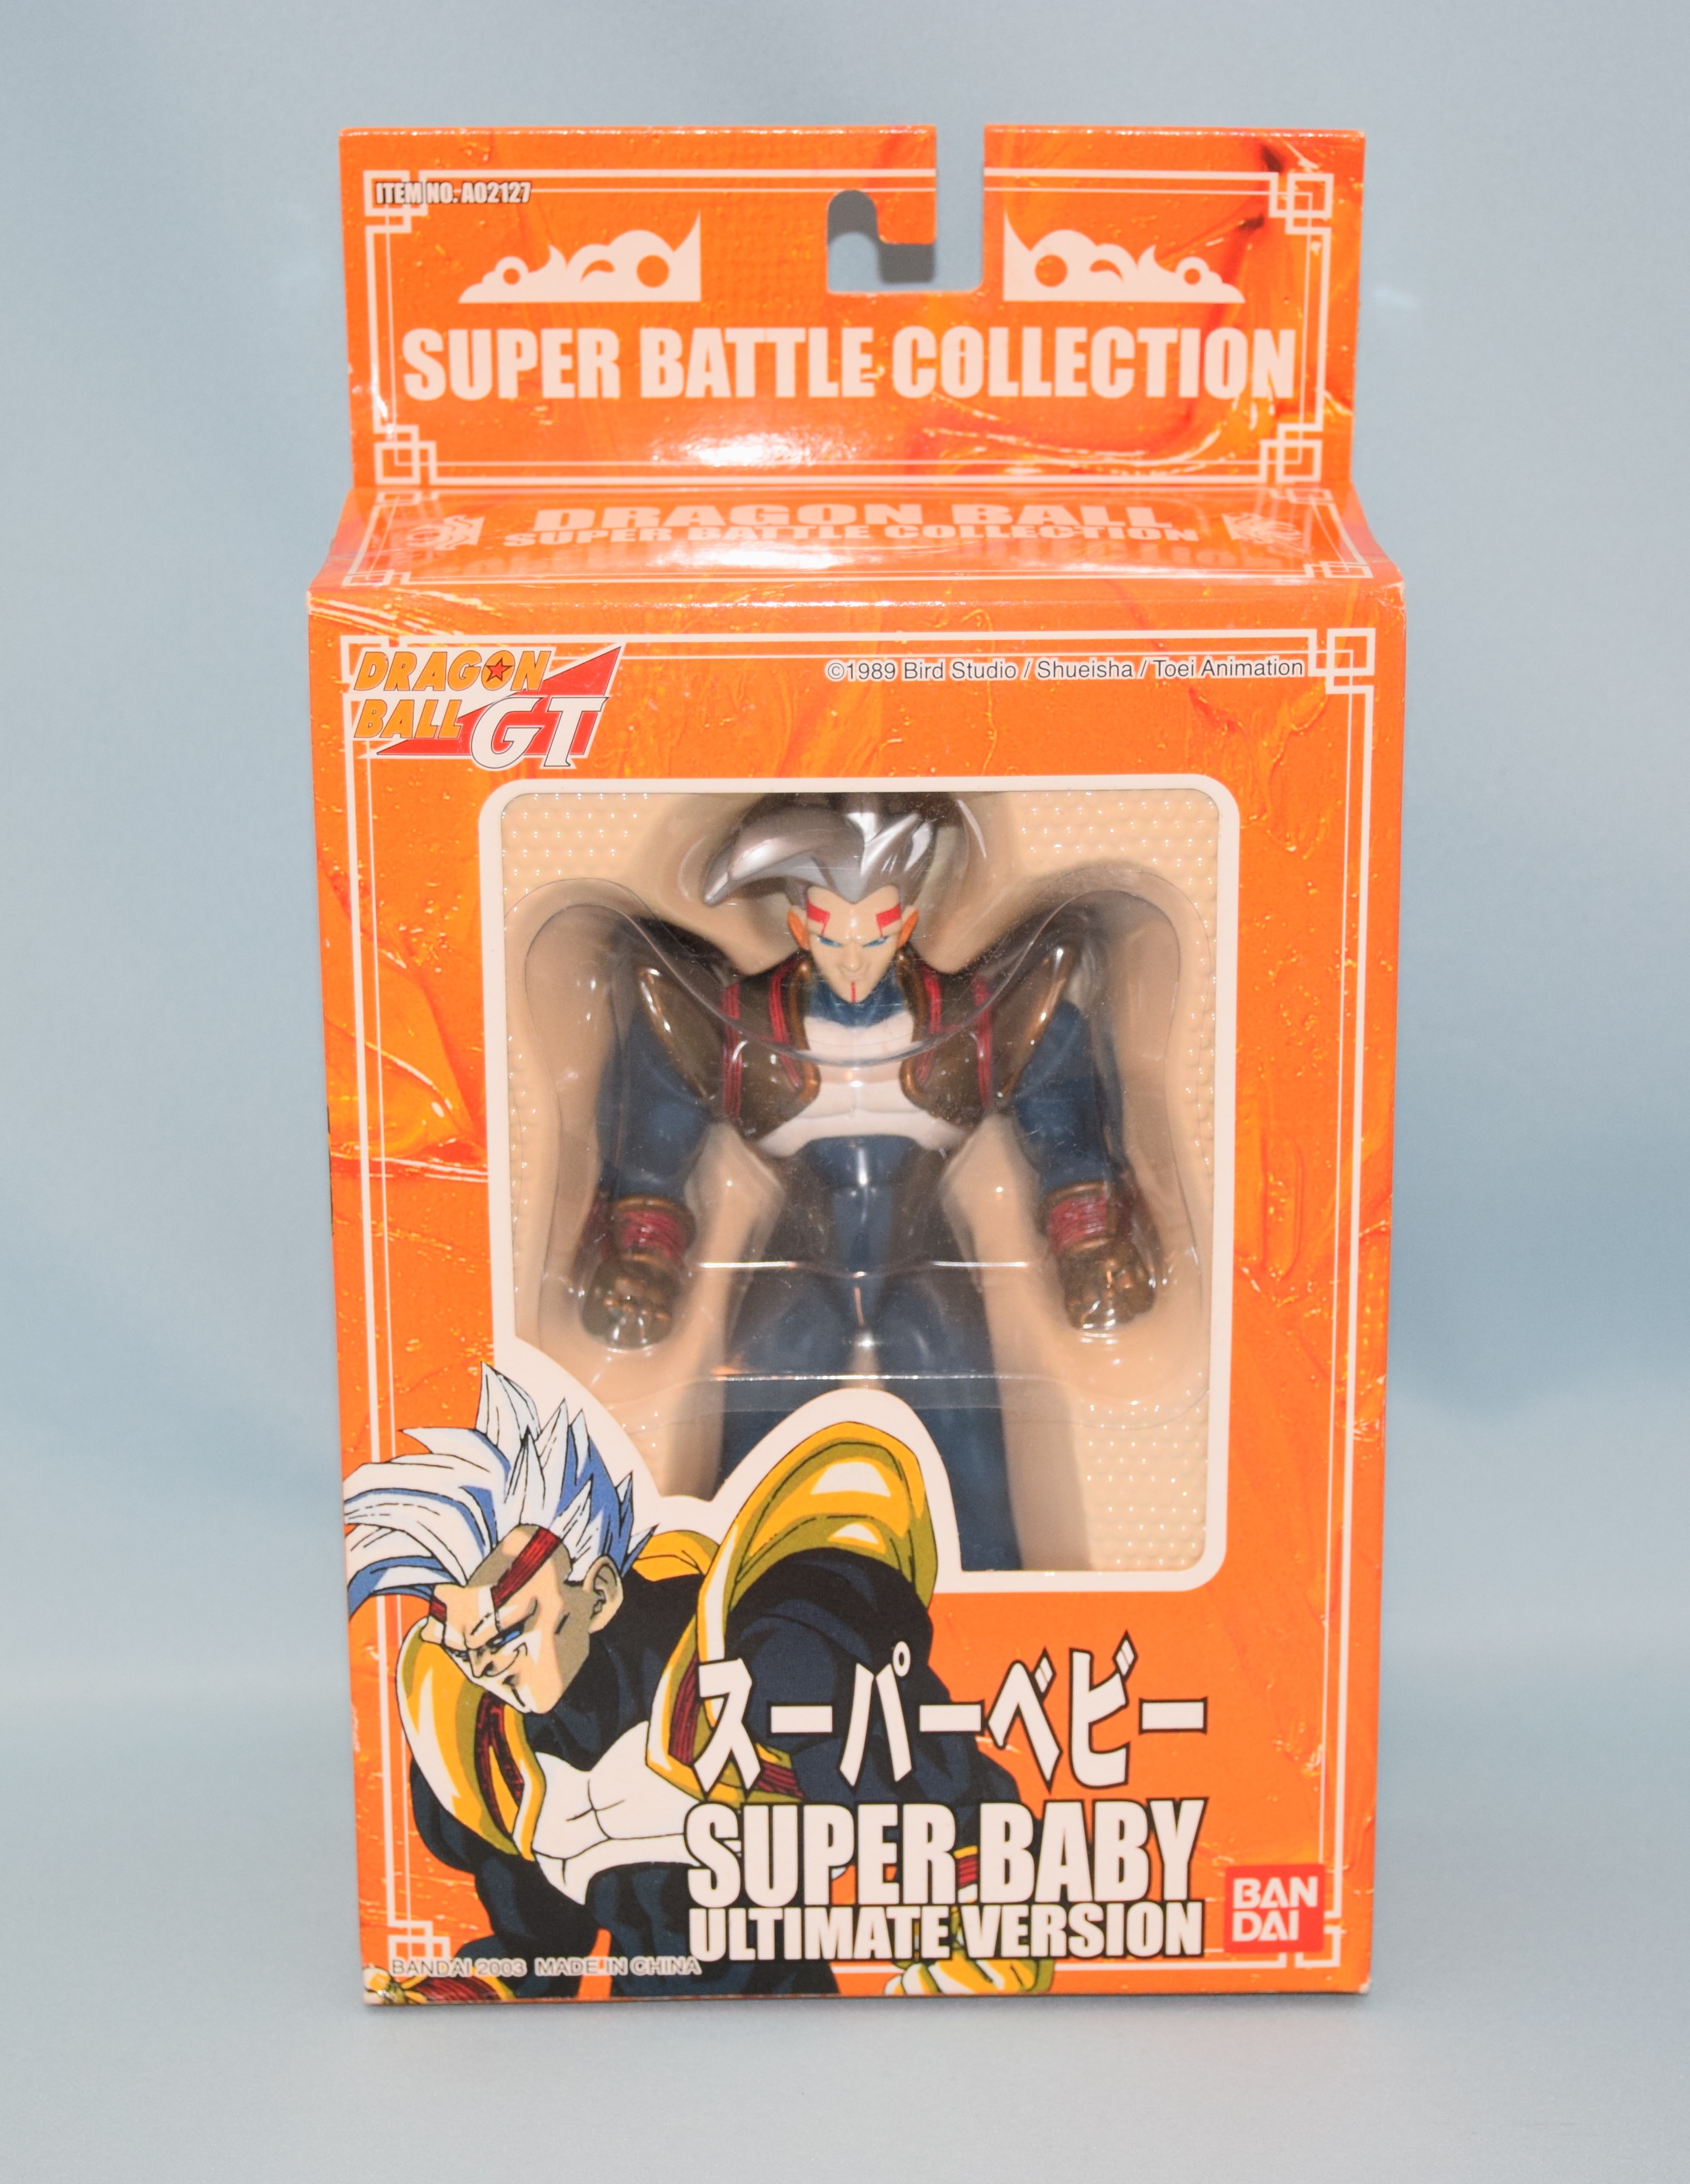 Dragon Ball GT : BANDAI H.K. Super Battle Collection Vol.34 - Super Baby(105086214)  - Entertainment Hobby Shop Jungle